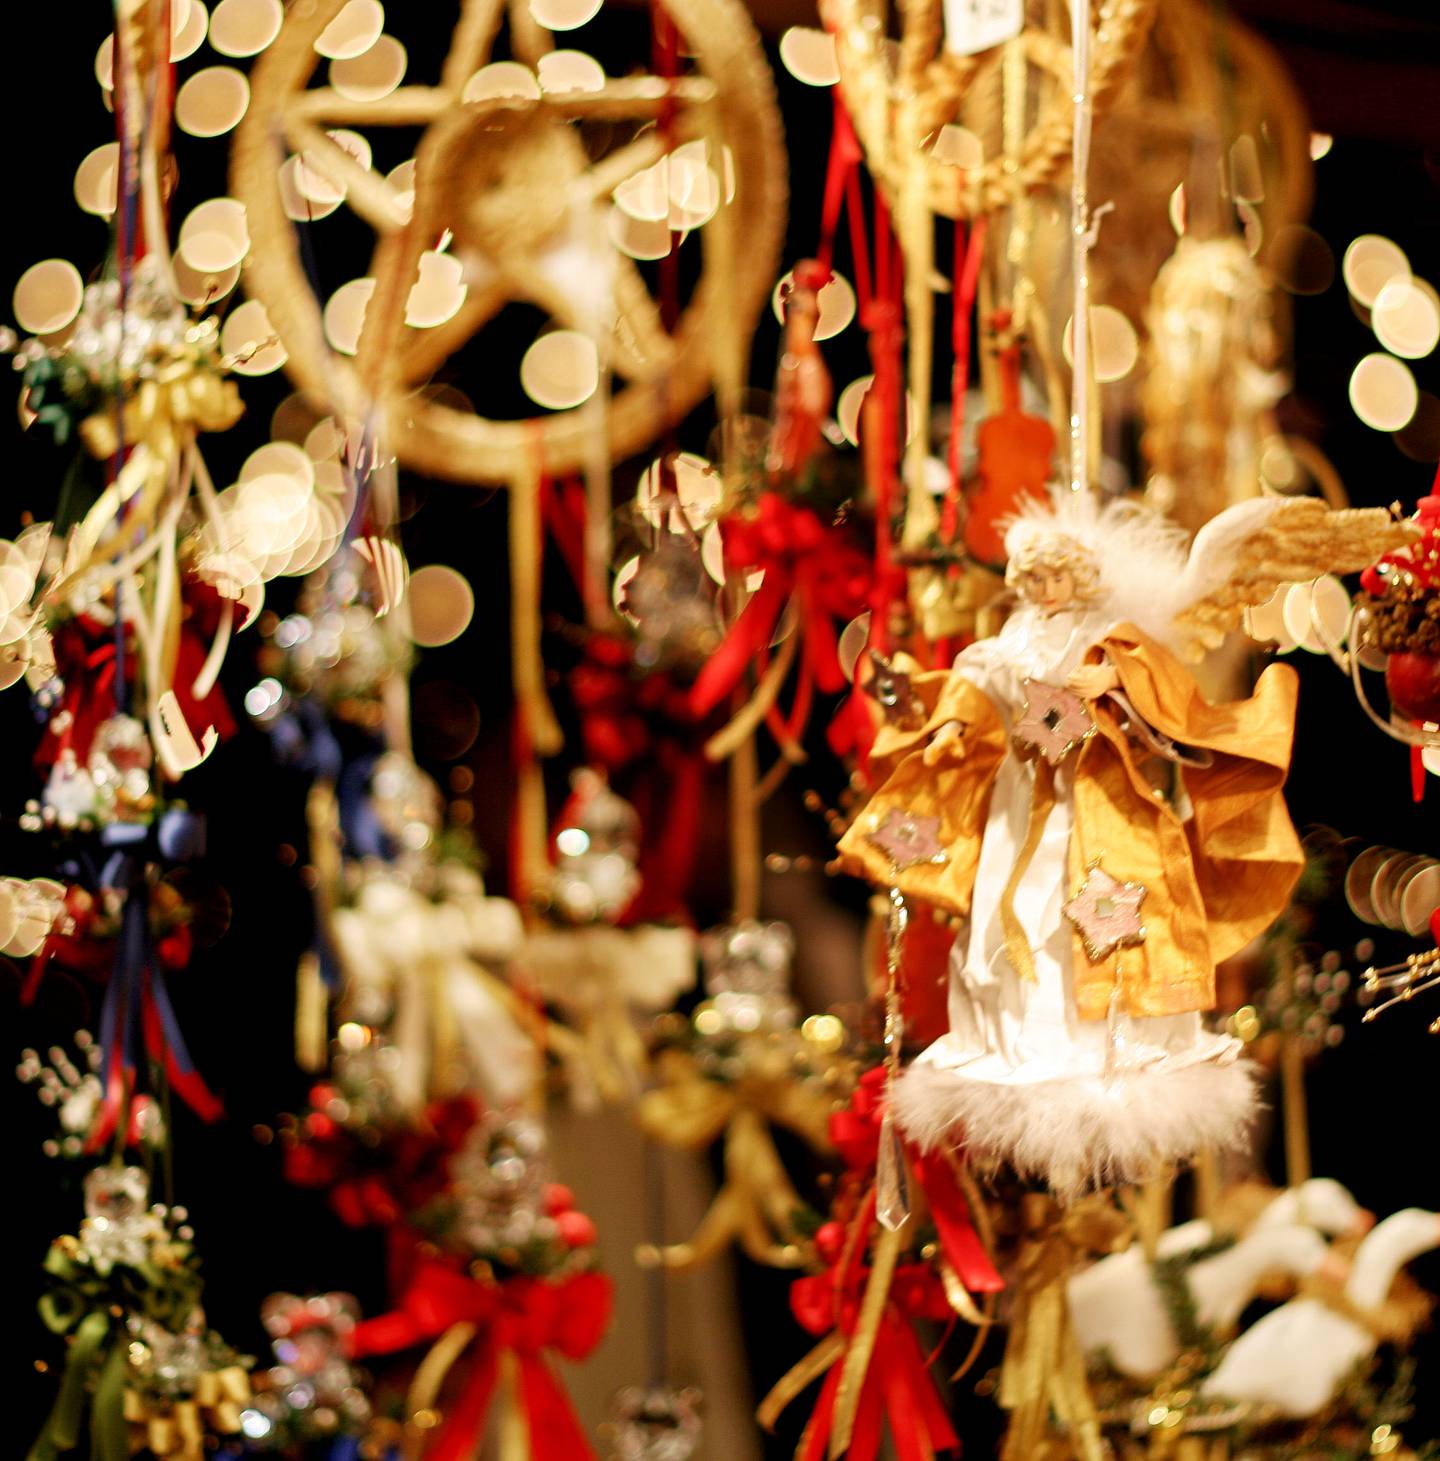 engler engel julemarkedet i Salzburg julen 2008 julepynt jul julestemning